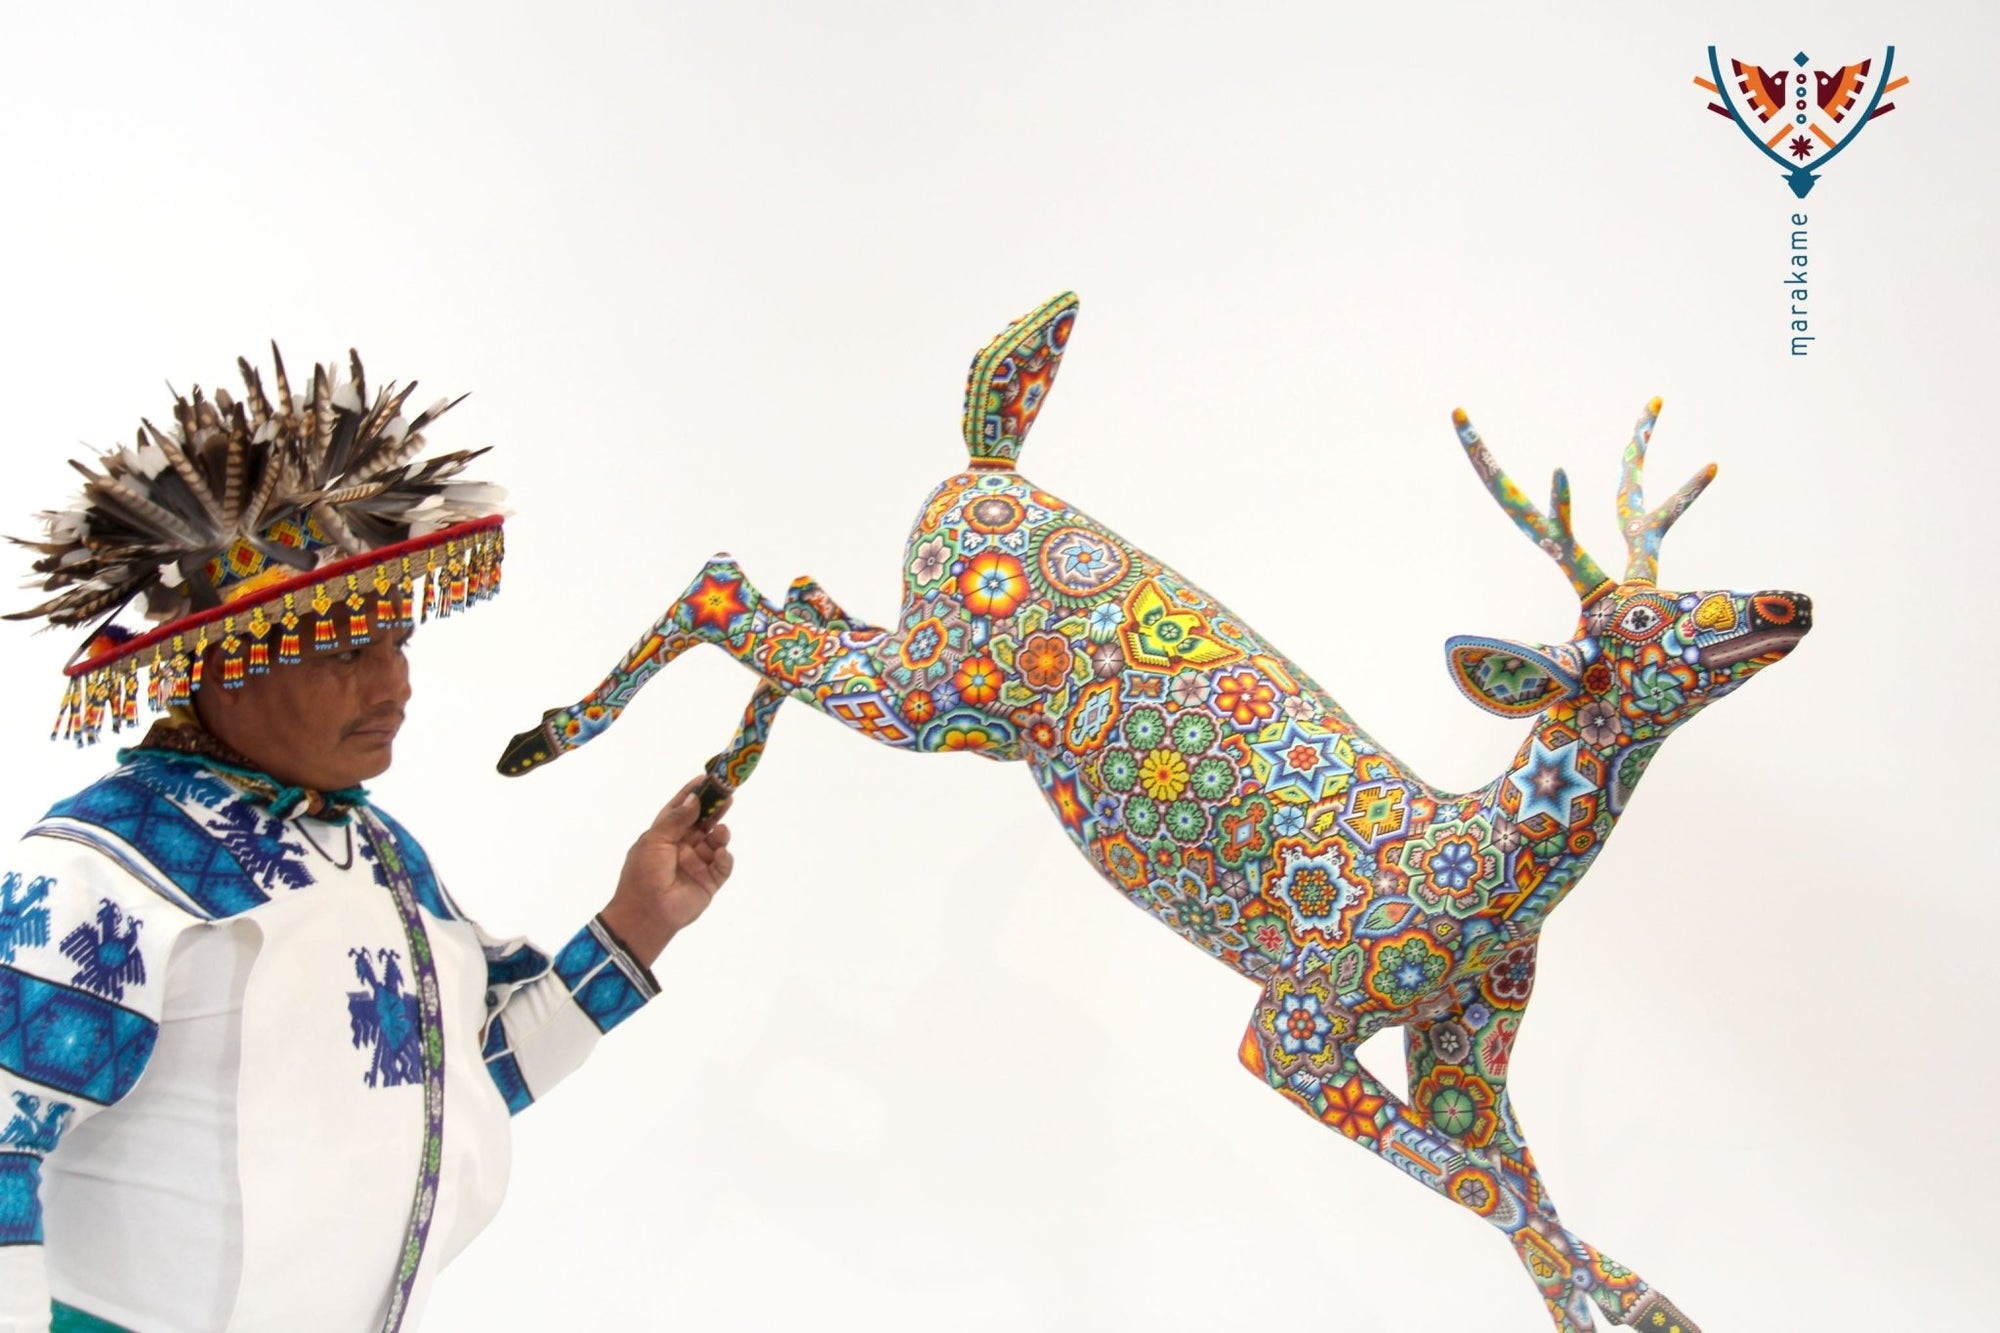 Scultura d'arte Huichol - Cervo che salta - Maxa utsik+kame - Arte Huichol - Marakame